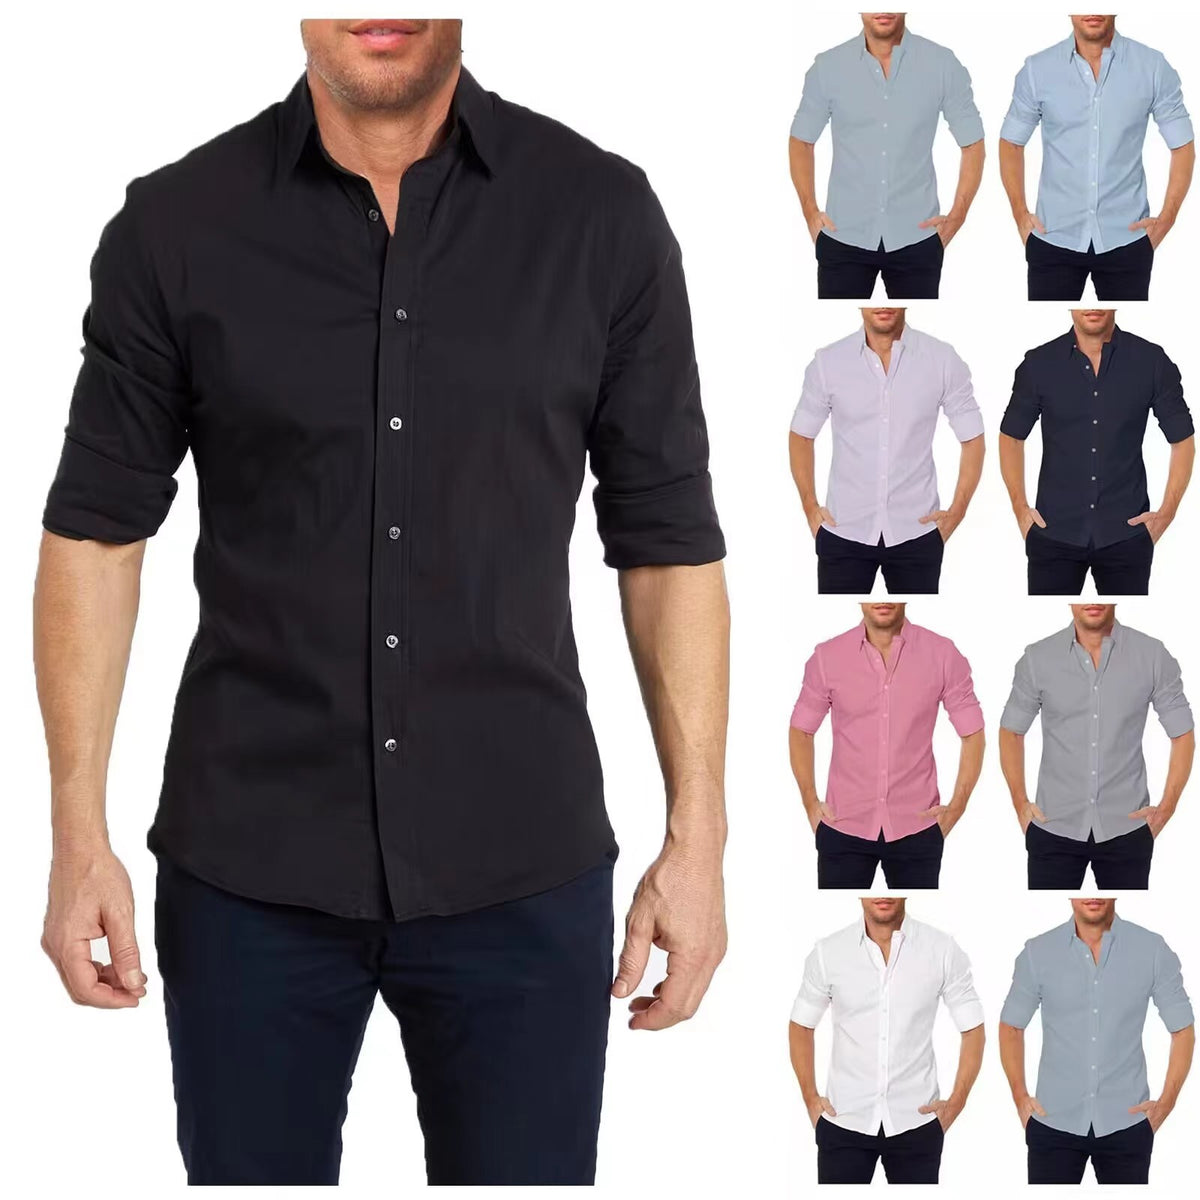 Stretchy Men's Shirt Zip Shirt